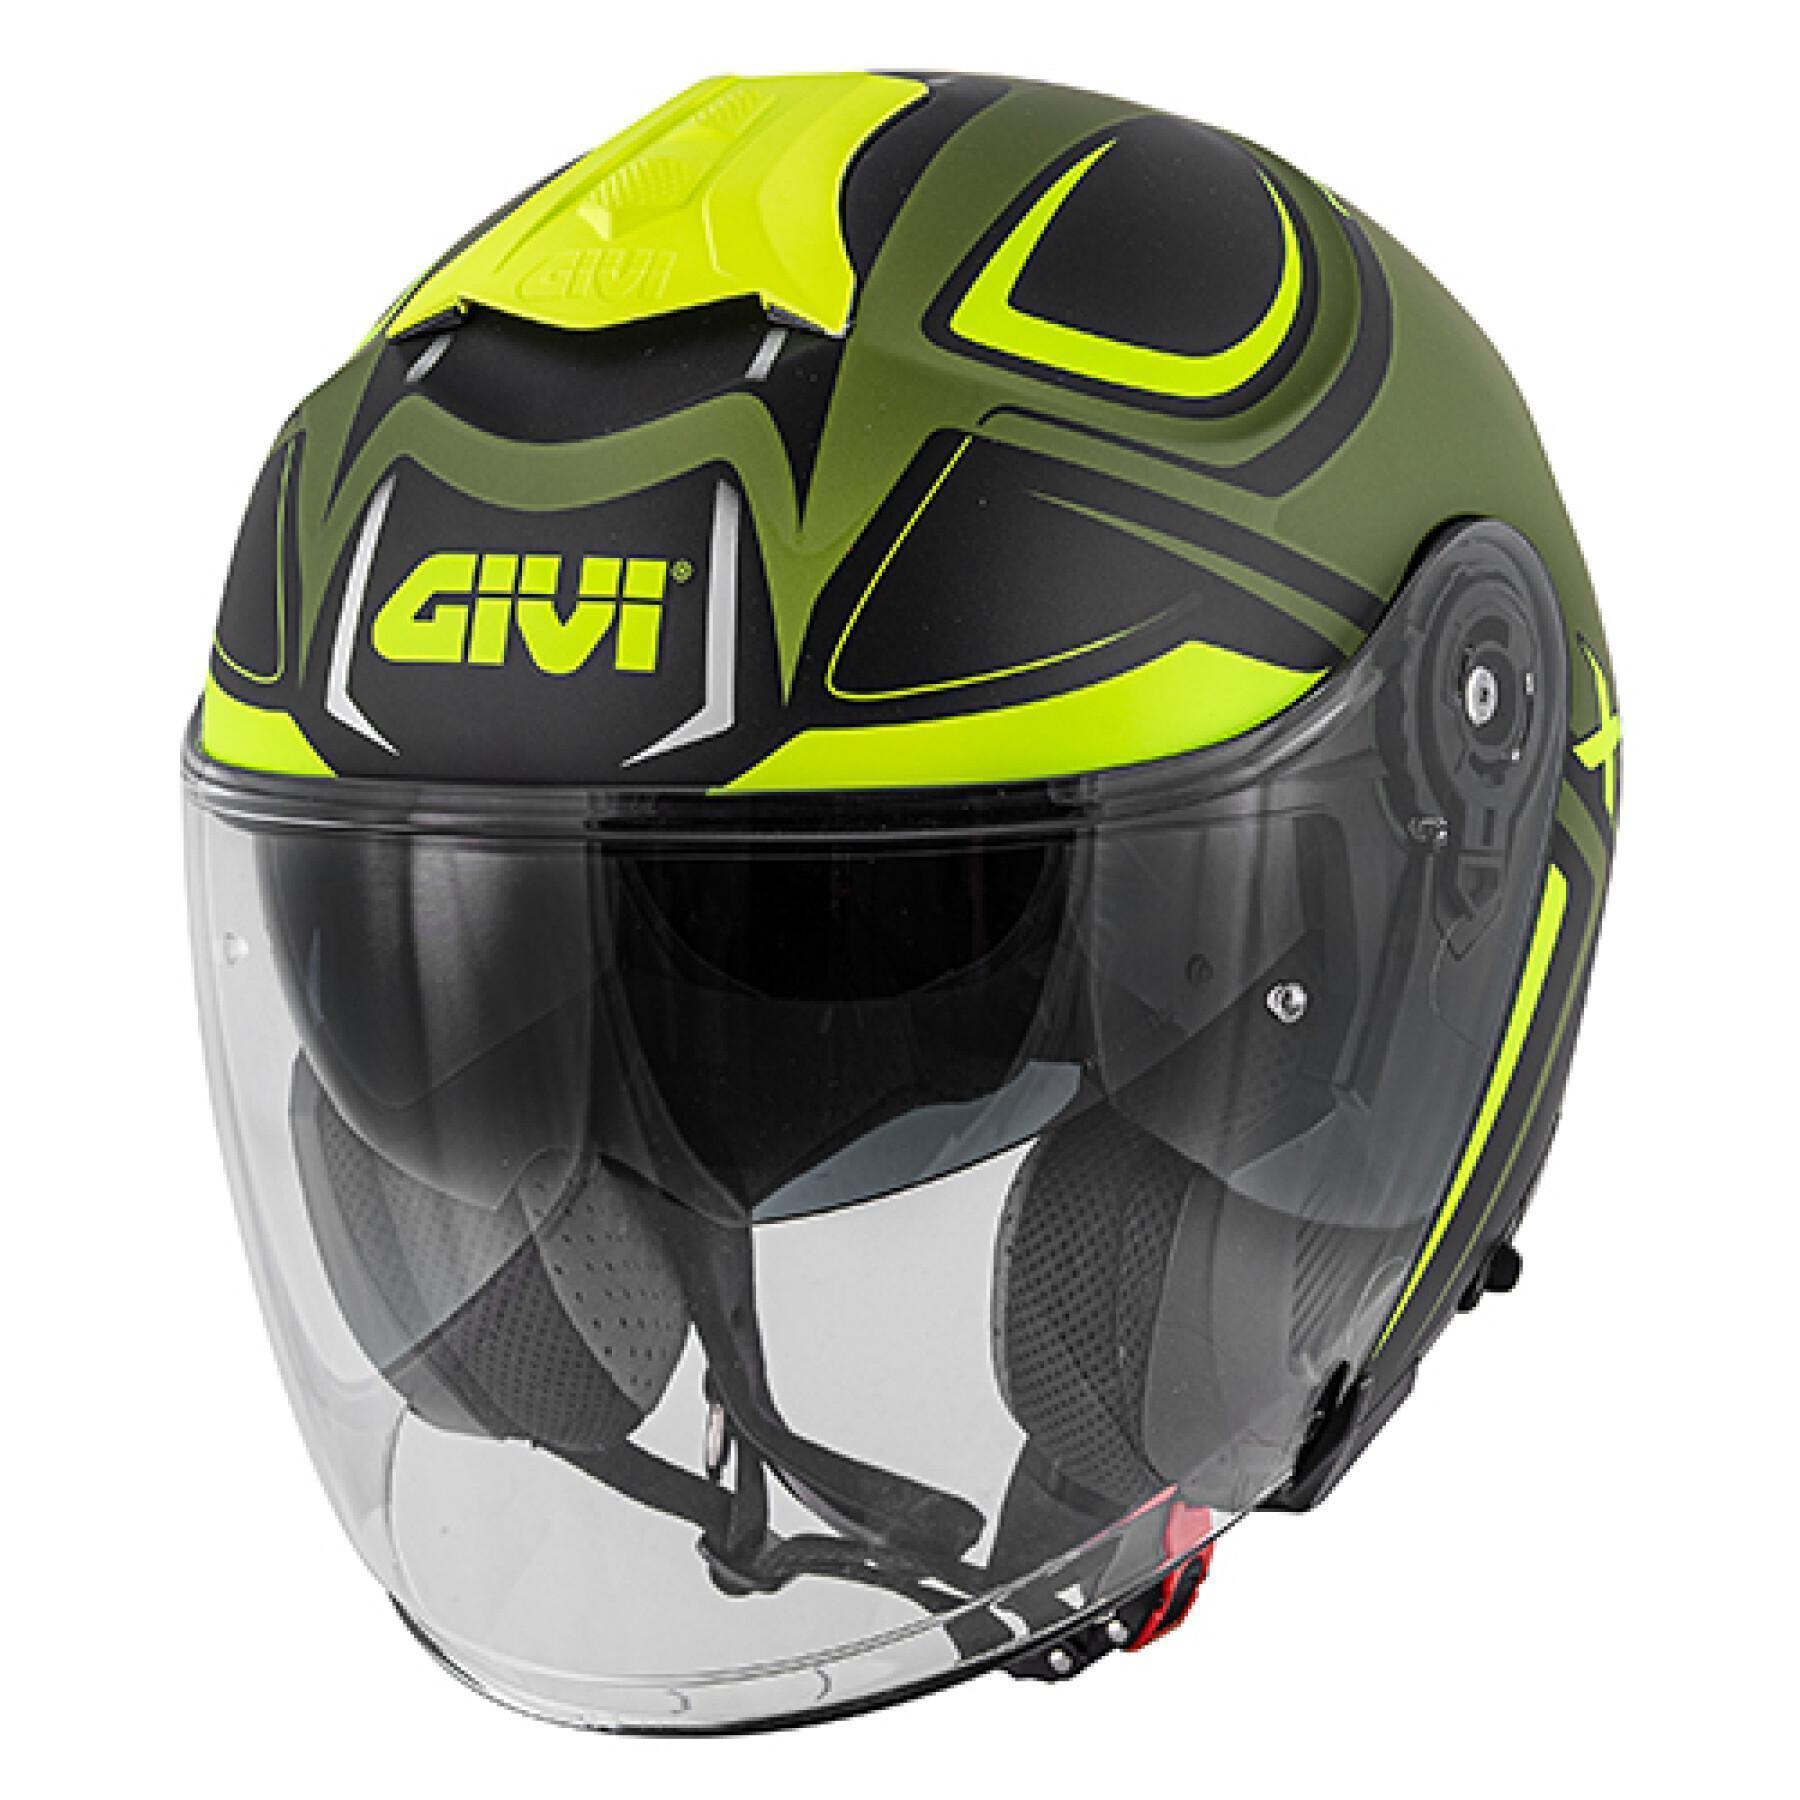 Jet motorcycle helmet Givi Planet Hyper